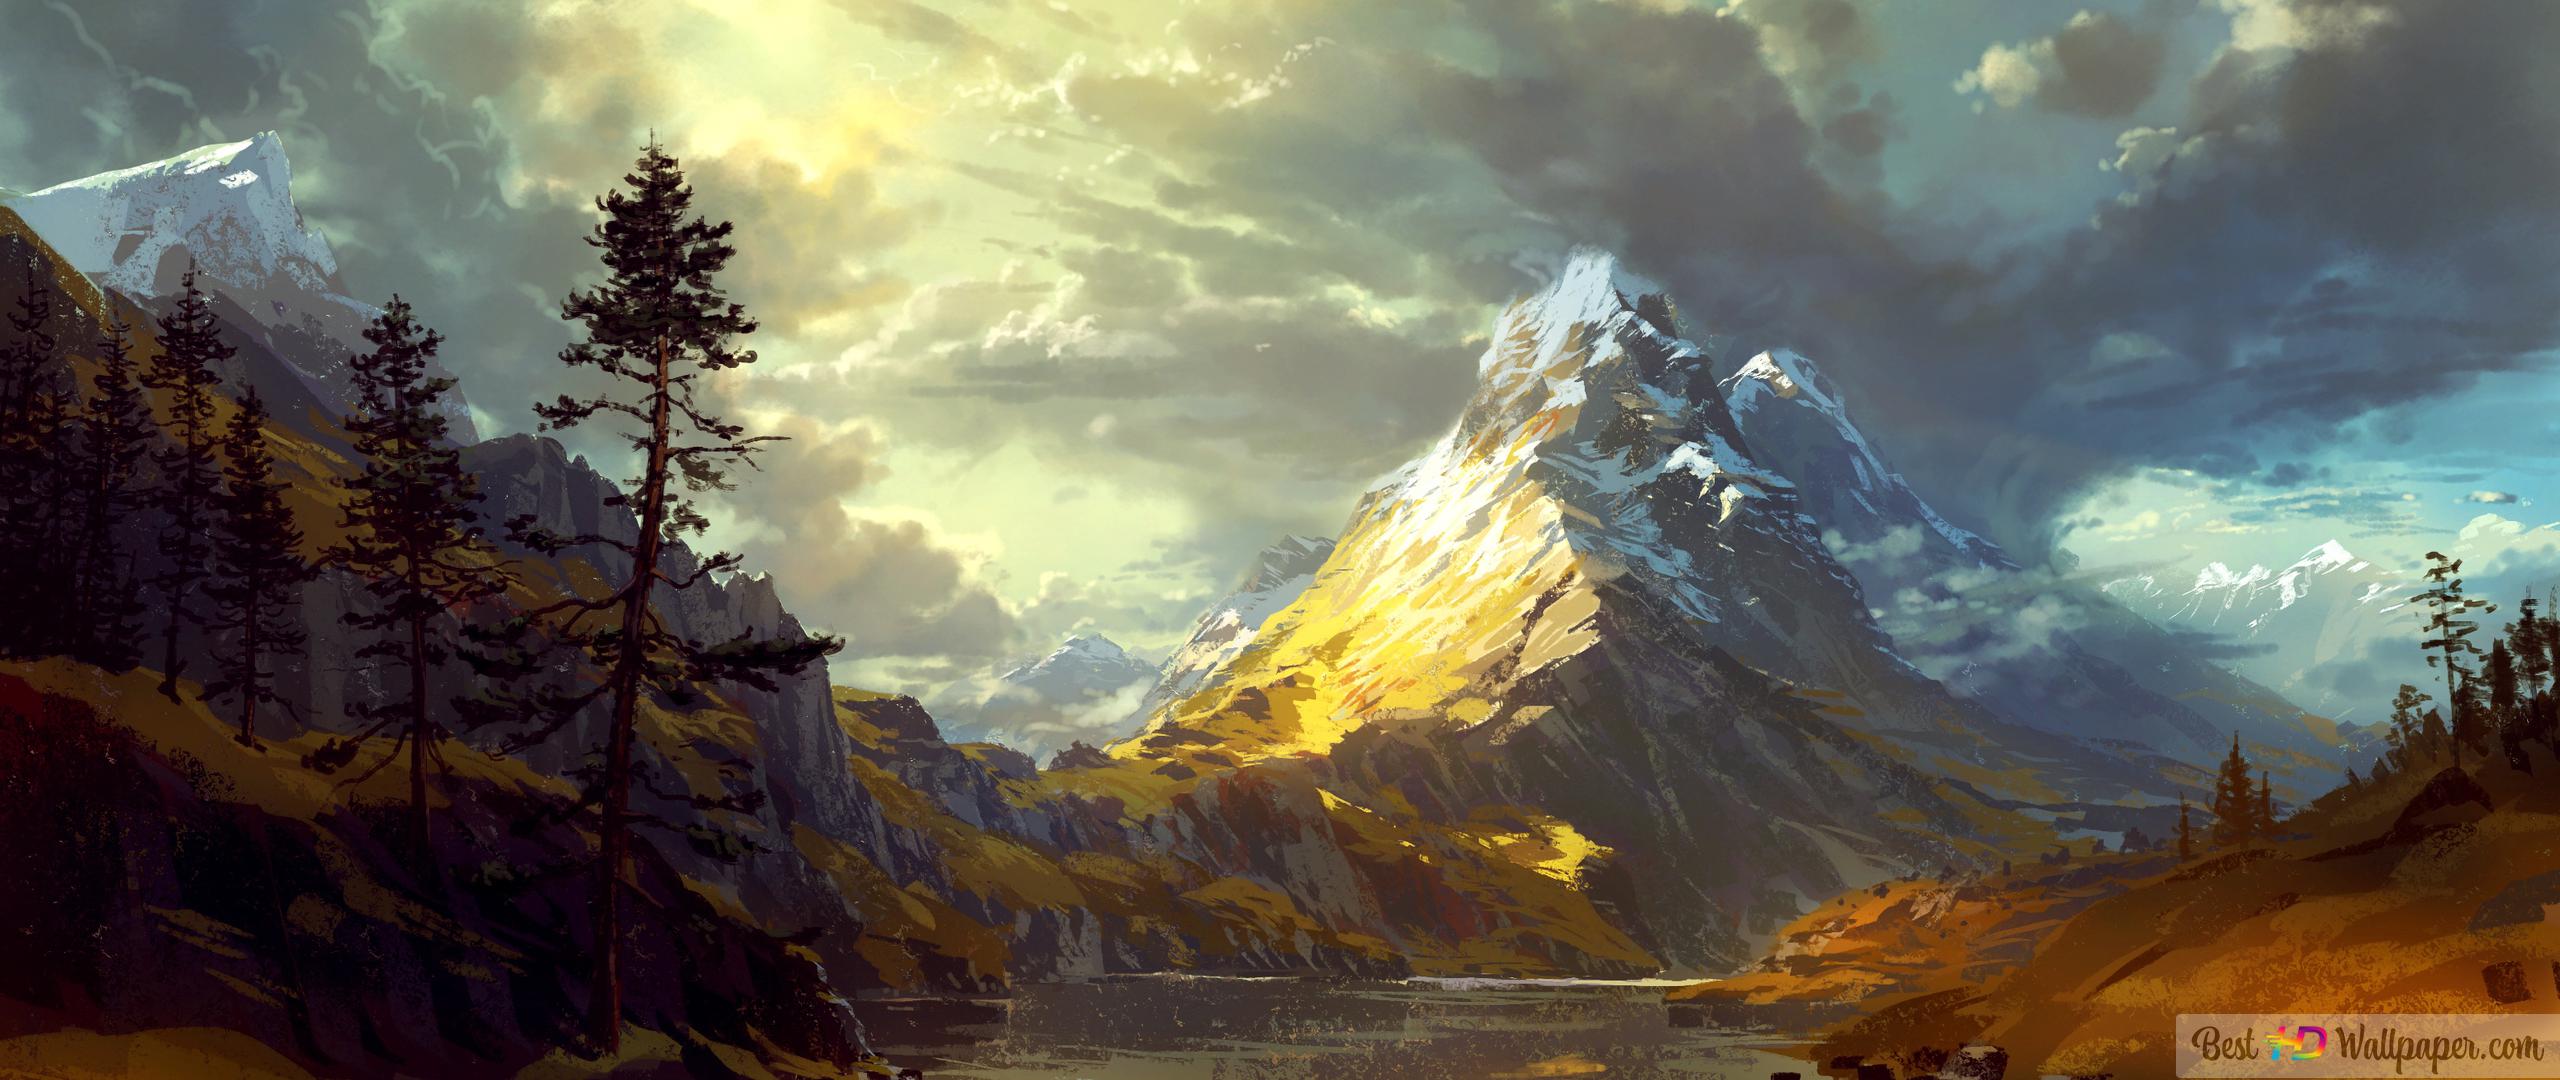 Epic Mountain Landscape Wallpapers